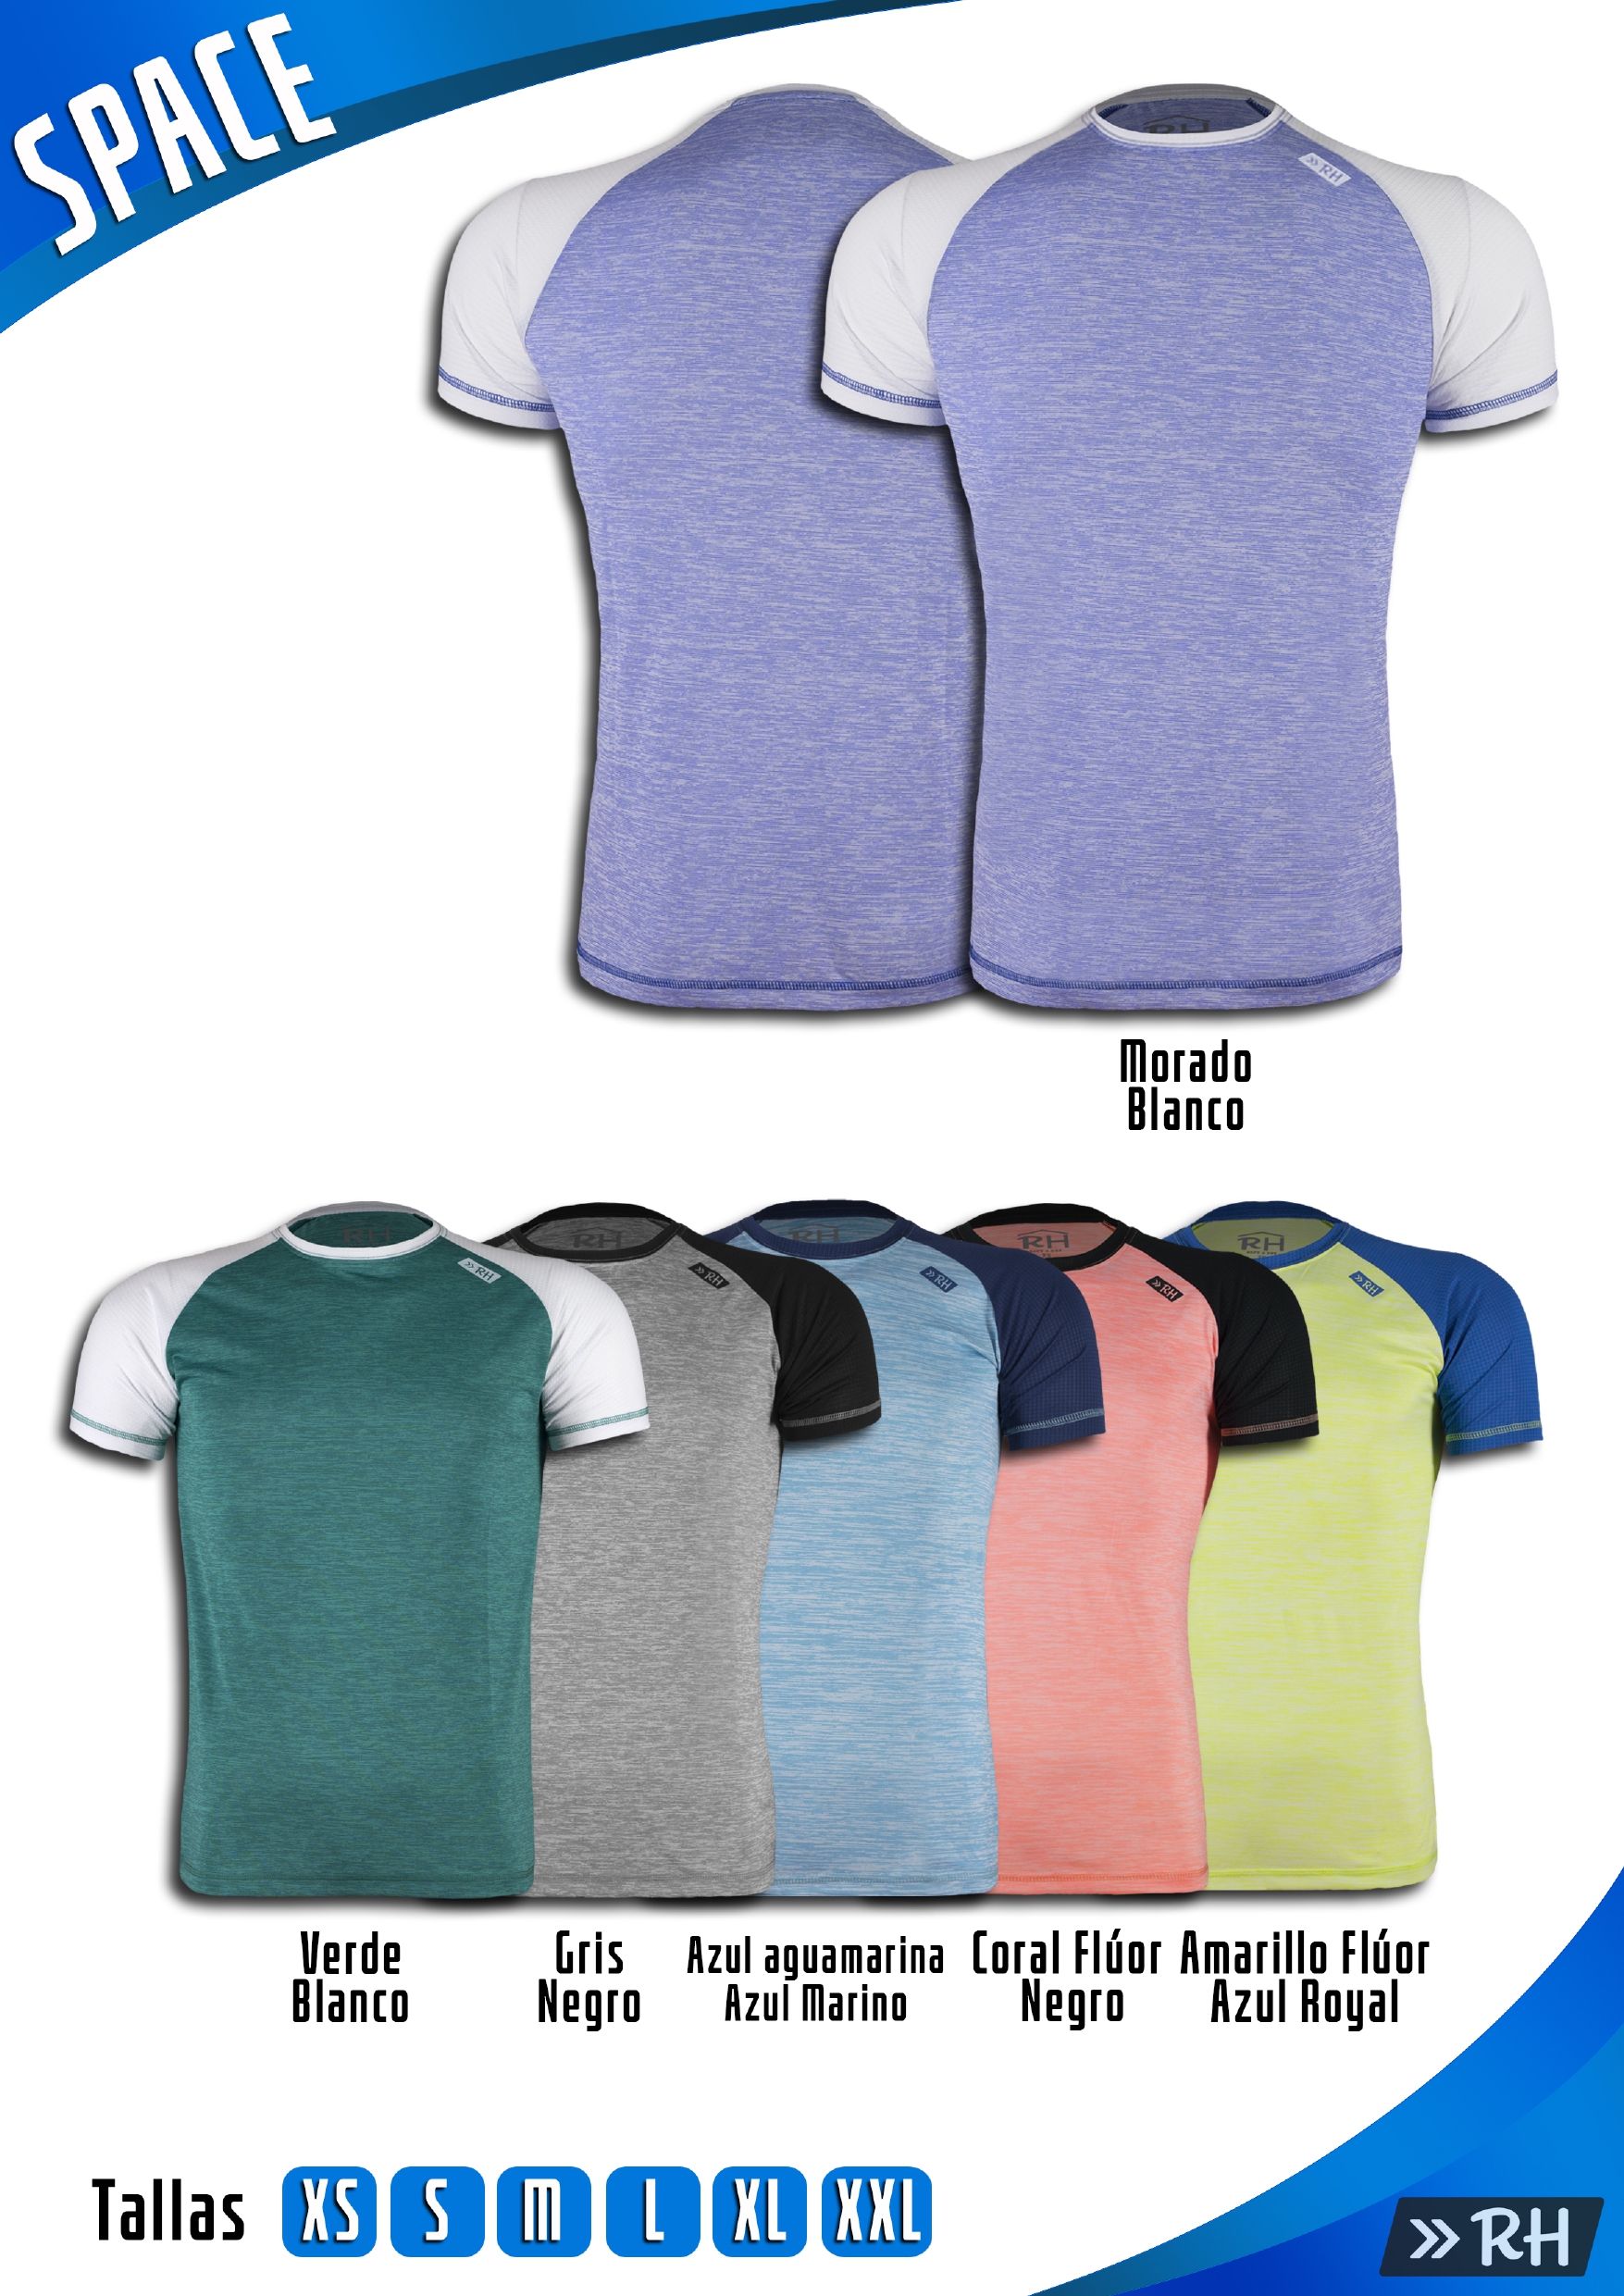 Camisetas tecnicas RH (2020)_page-0007